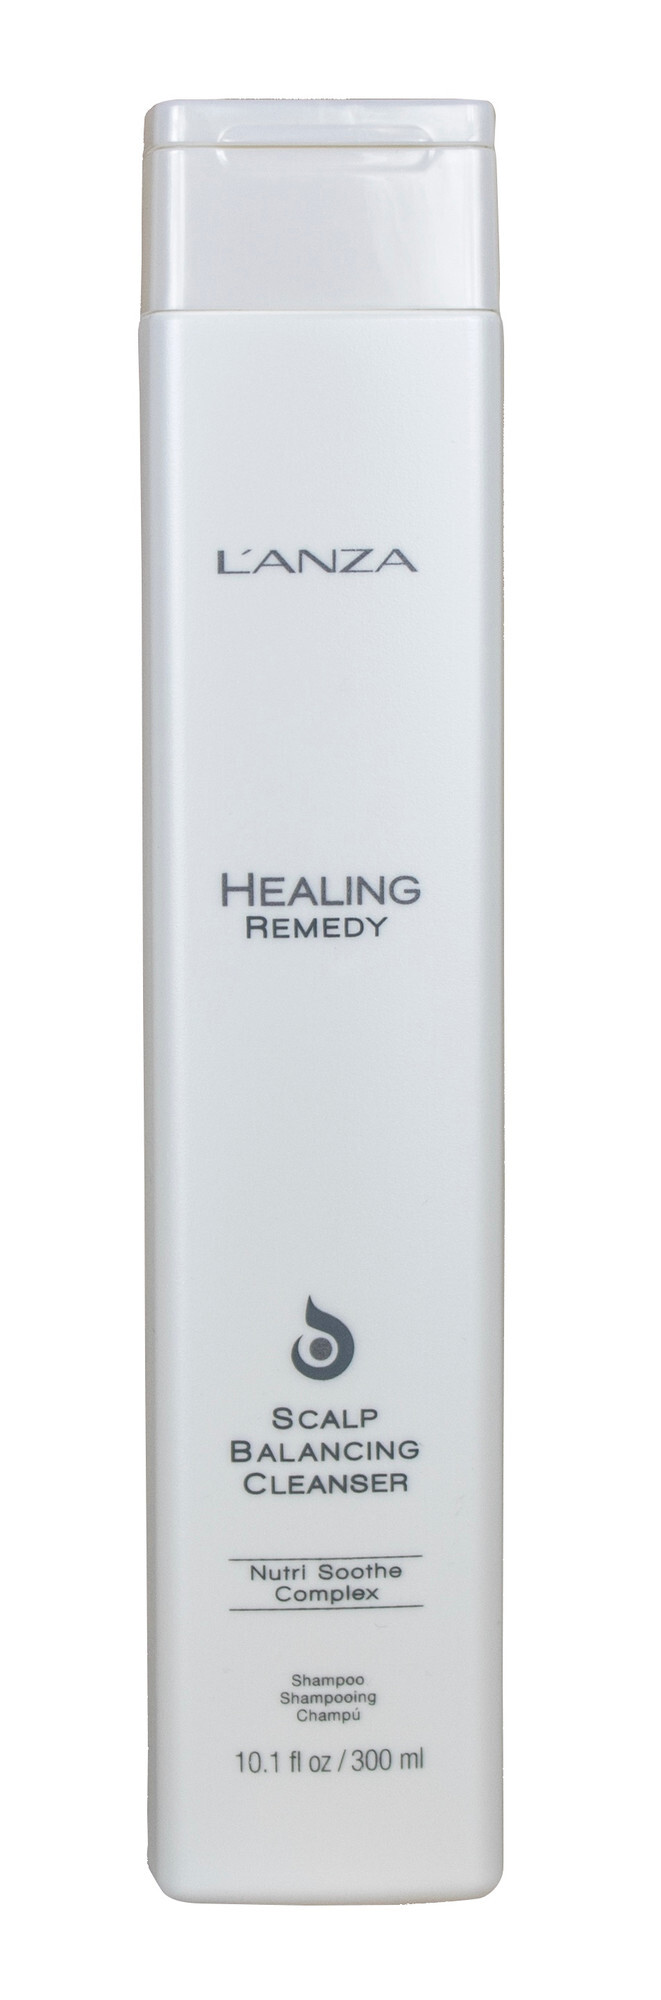 Lanza Healing Remedy Scalp Balancing Cleanser - 300 ml - Shampoo